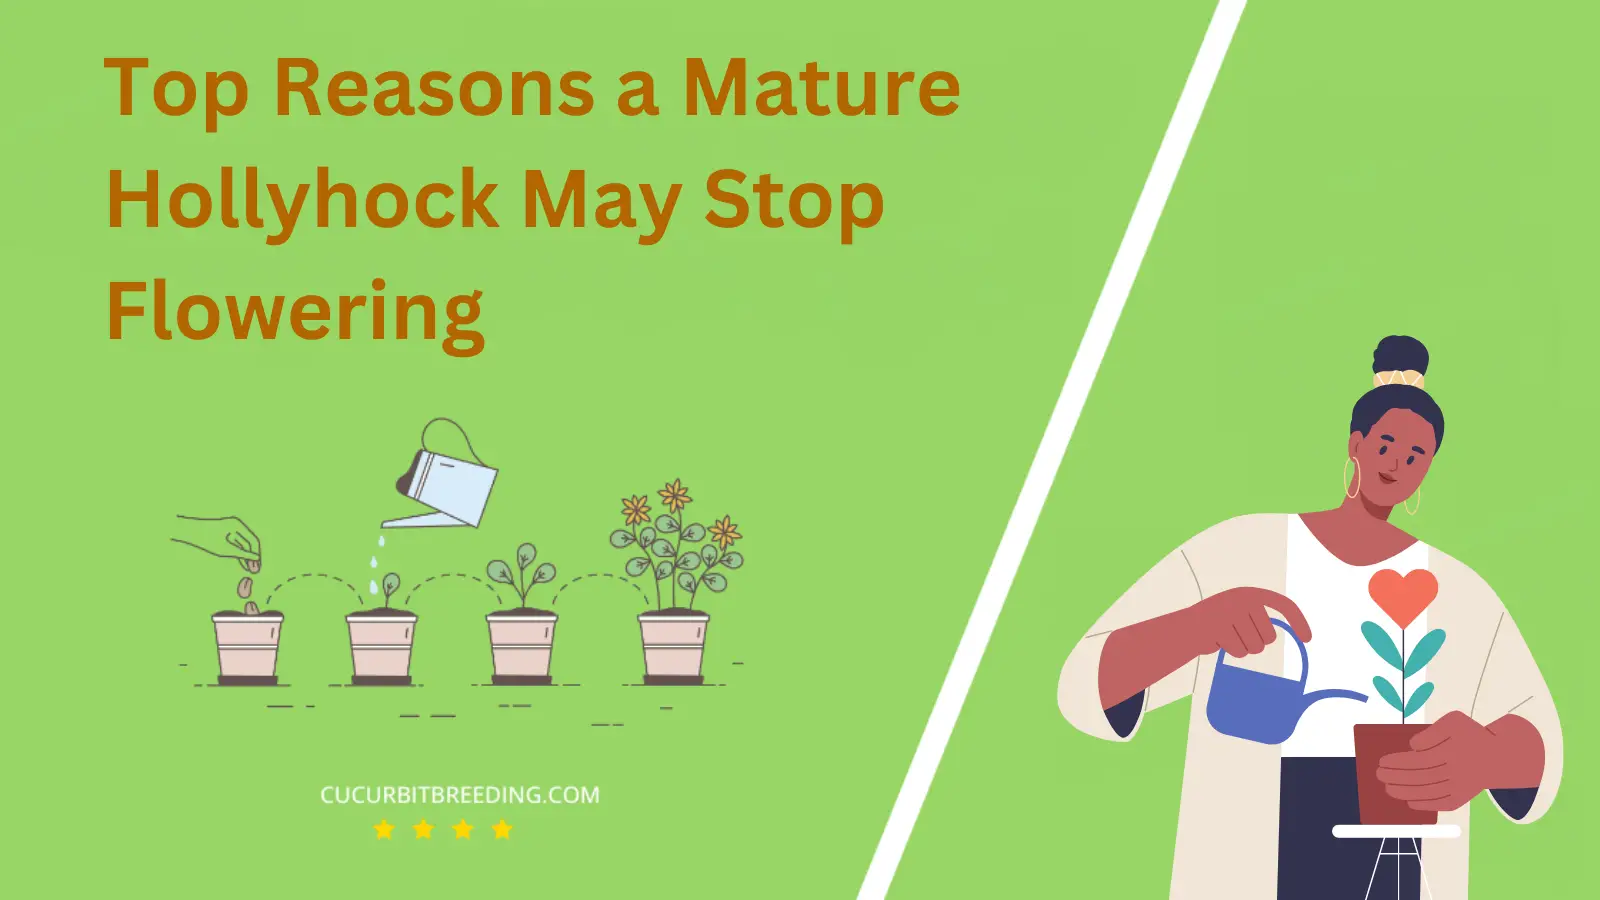 Top Reasons a Mature Hollyhock May Stop Flowering